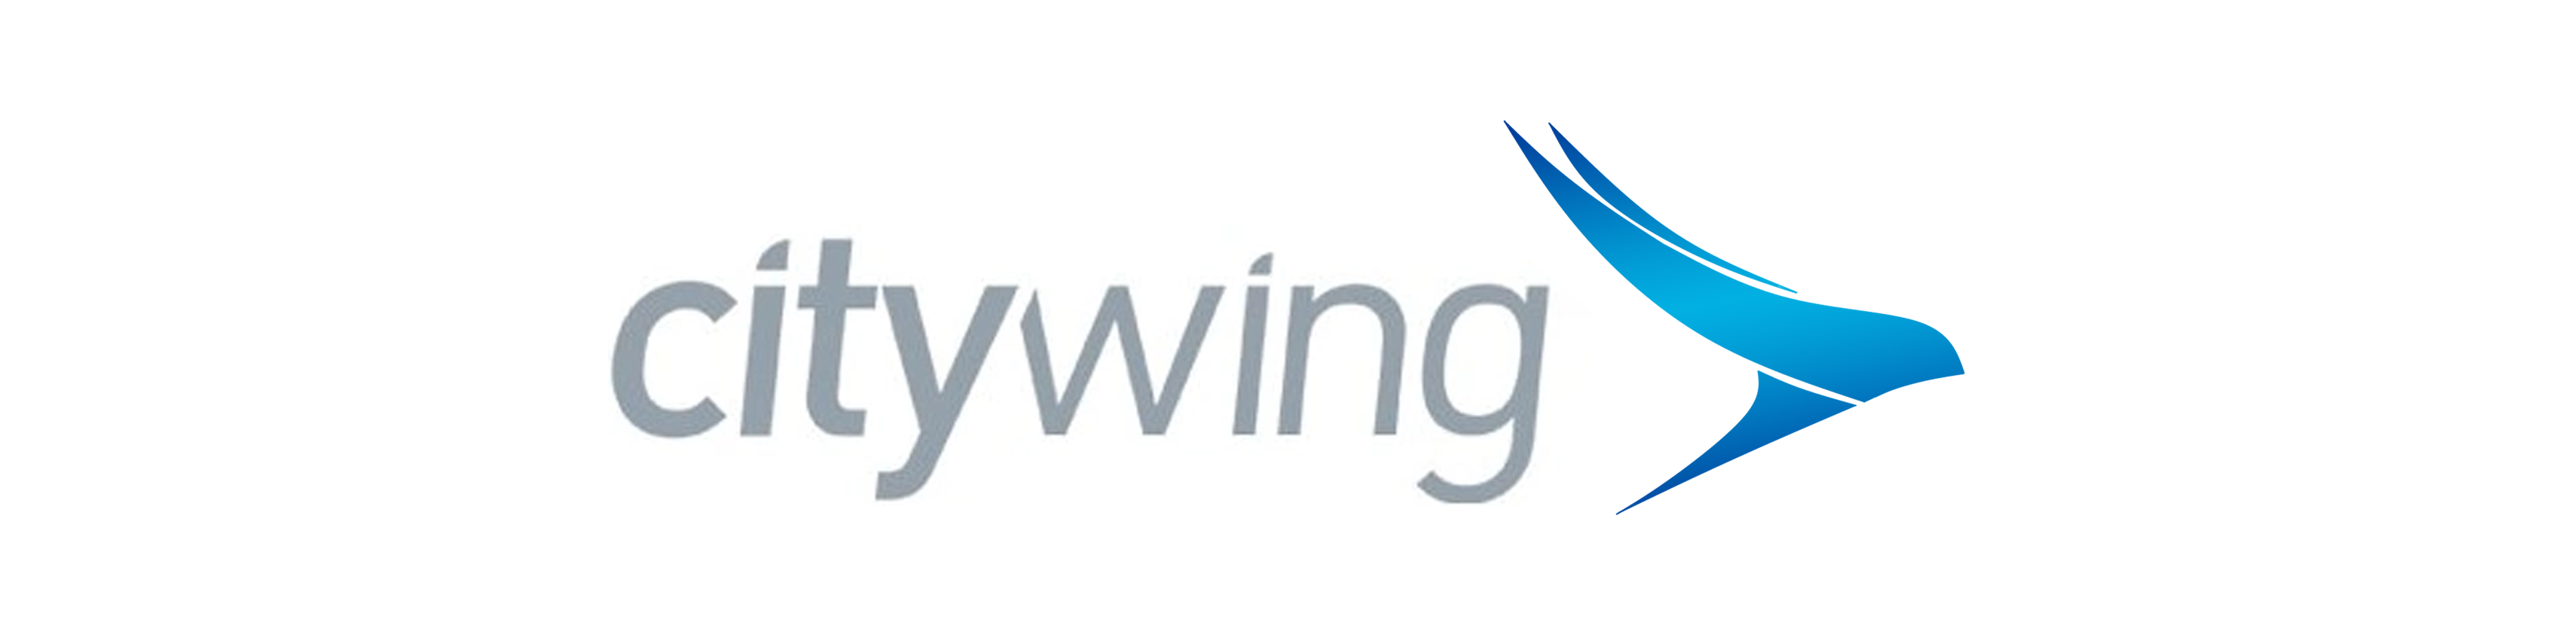 Airberlin Logo